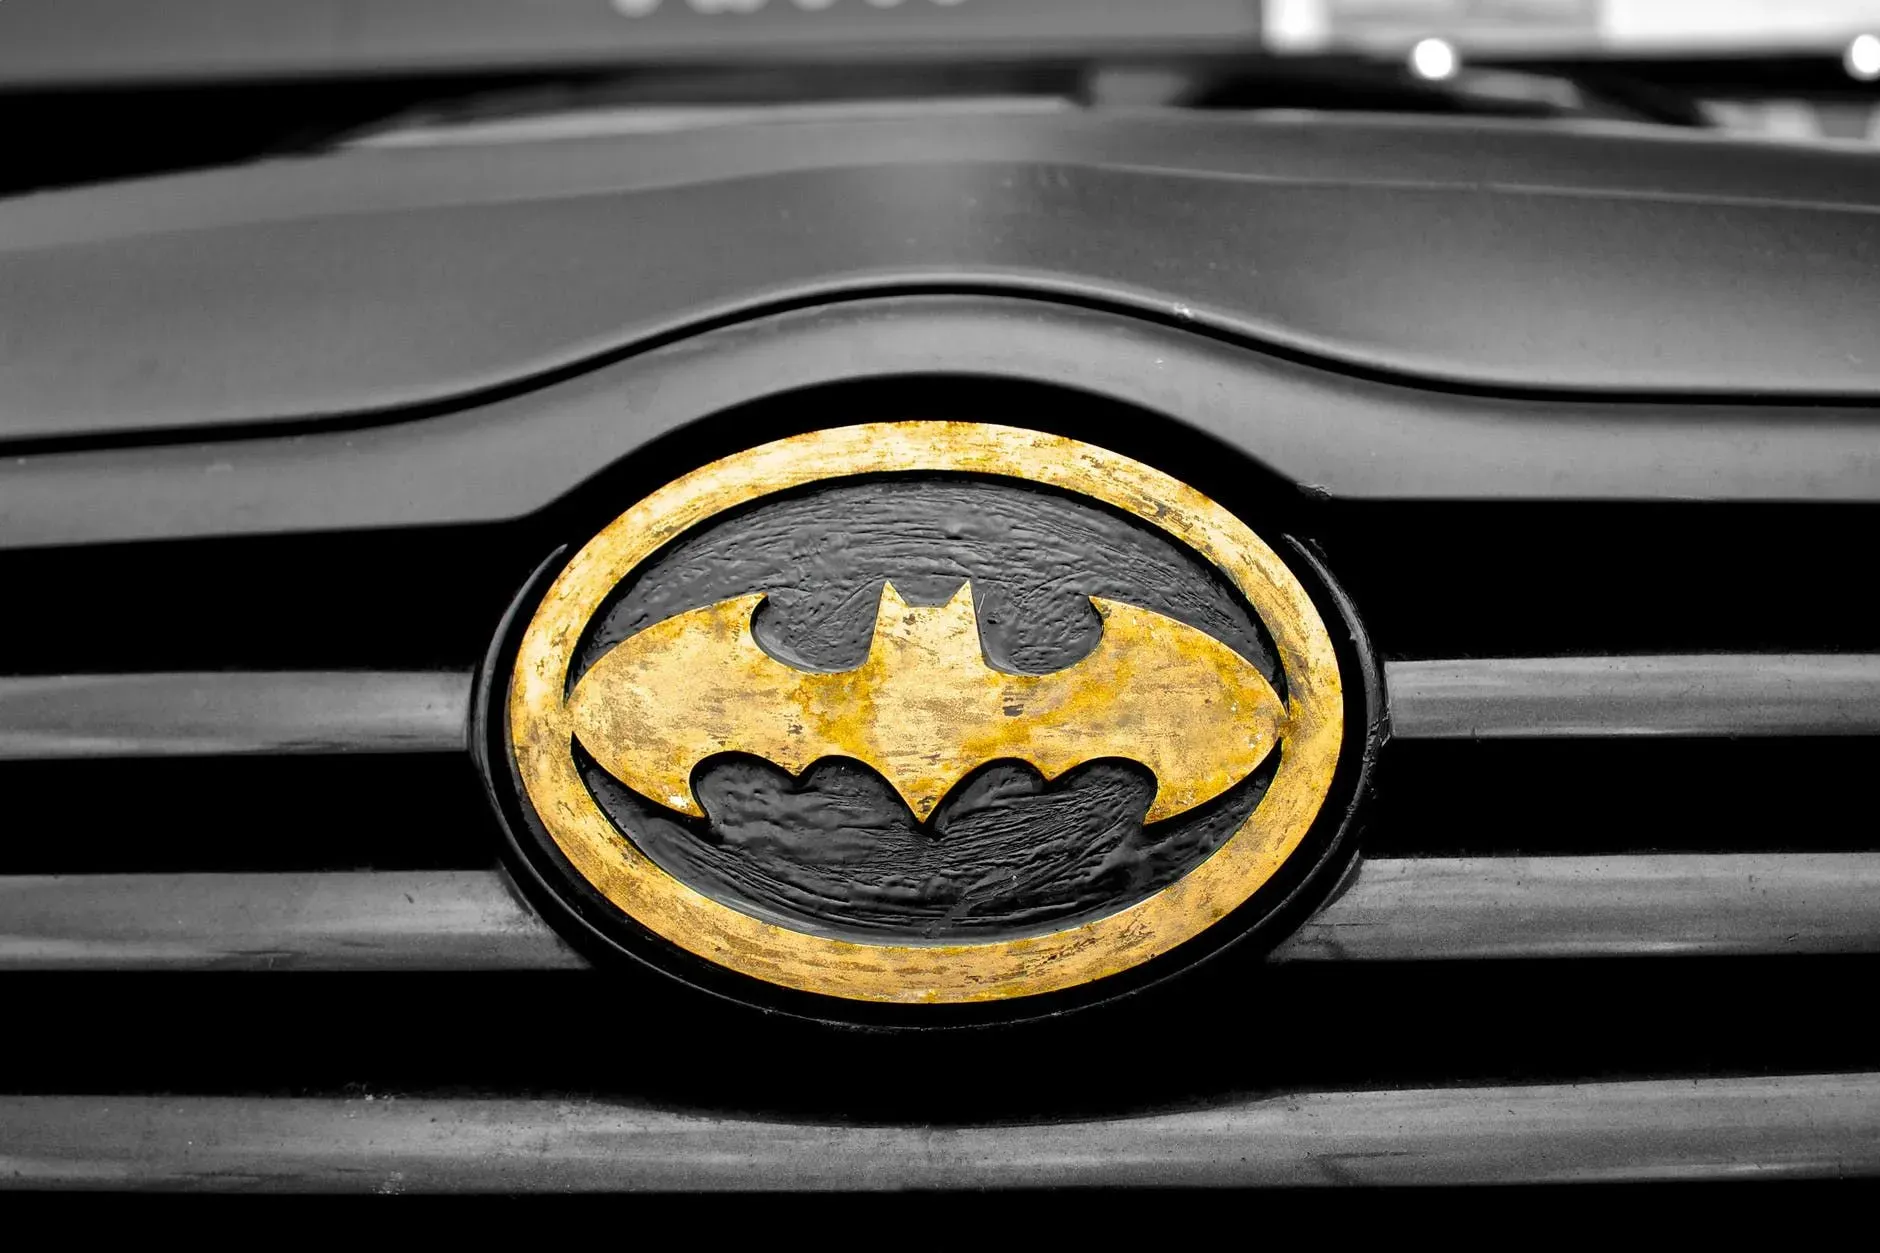 The Batman symbol is iconic.